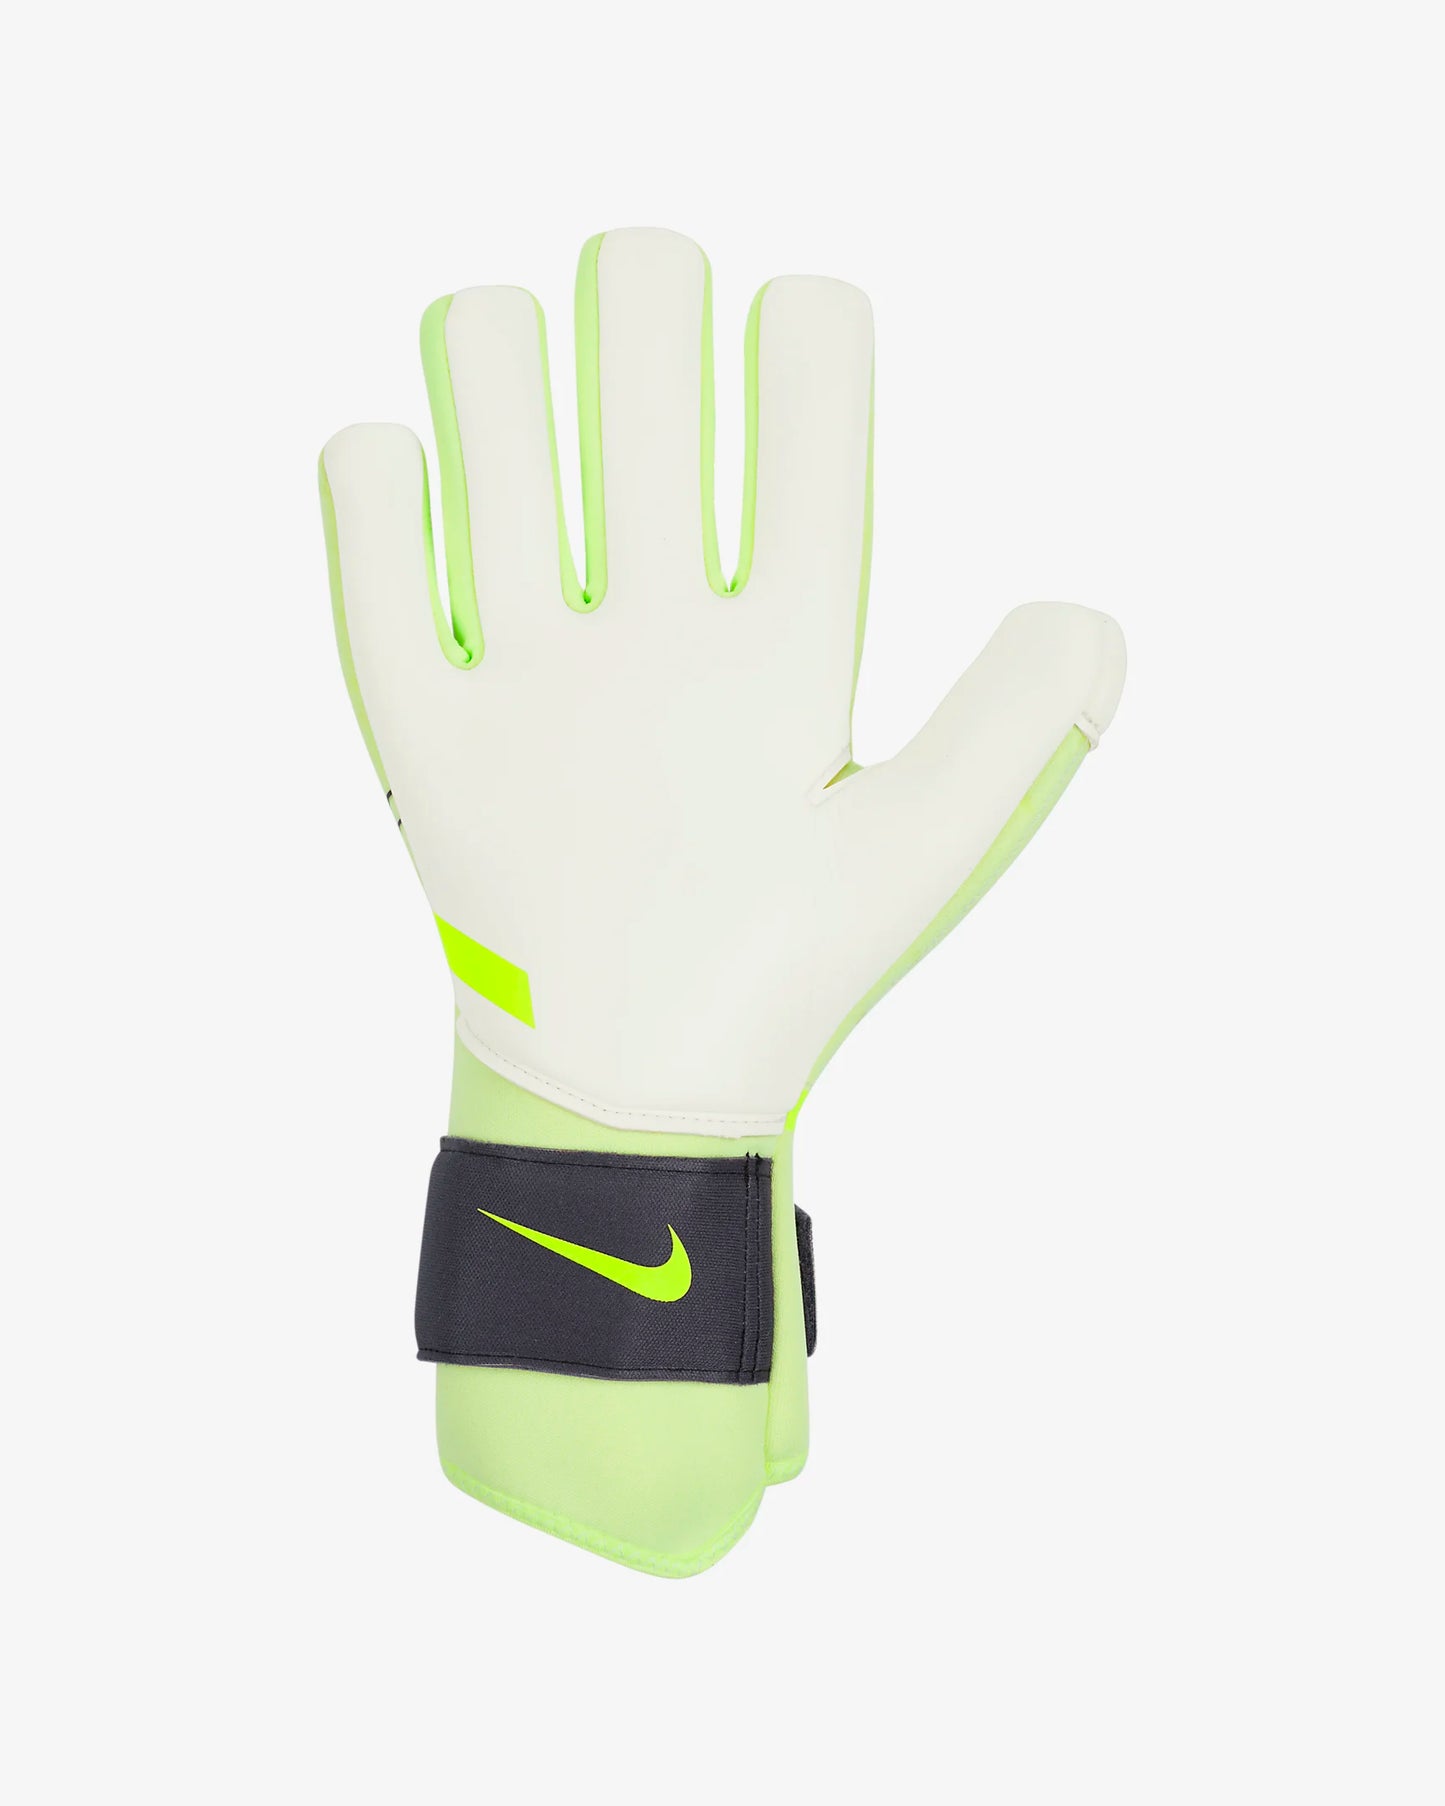 Nike Phantom Shadow Gloves